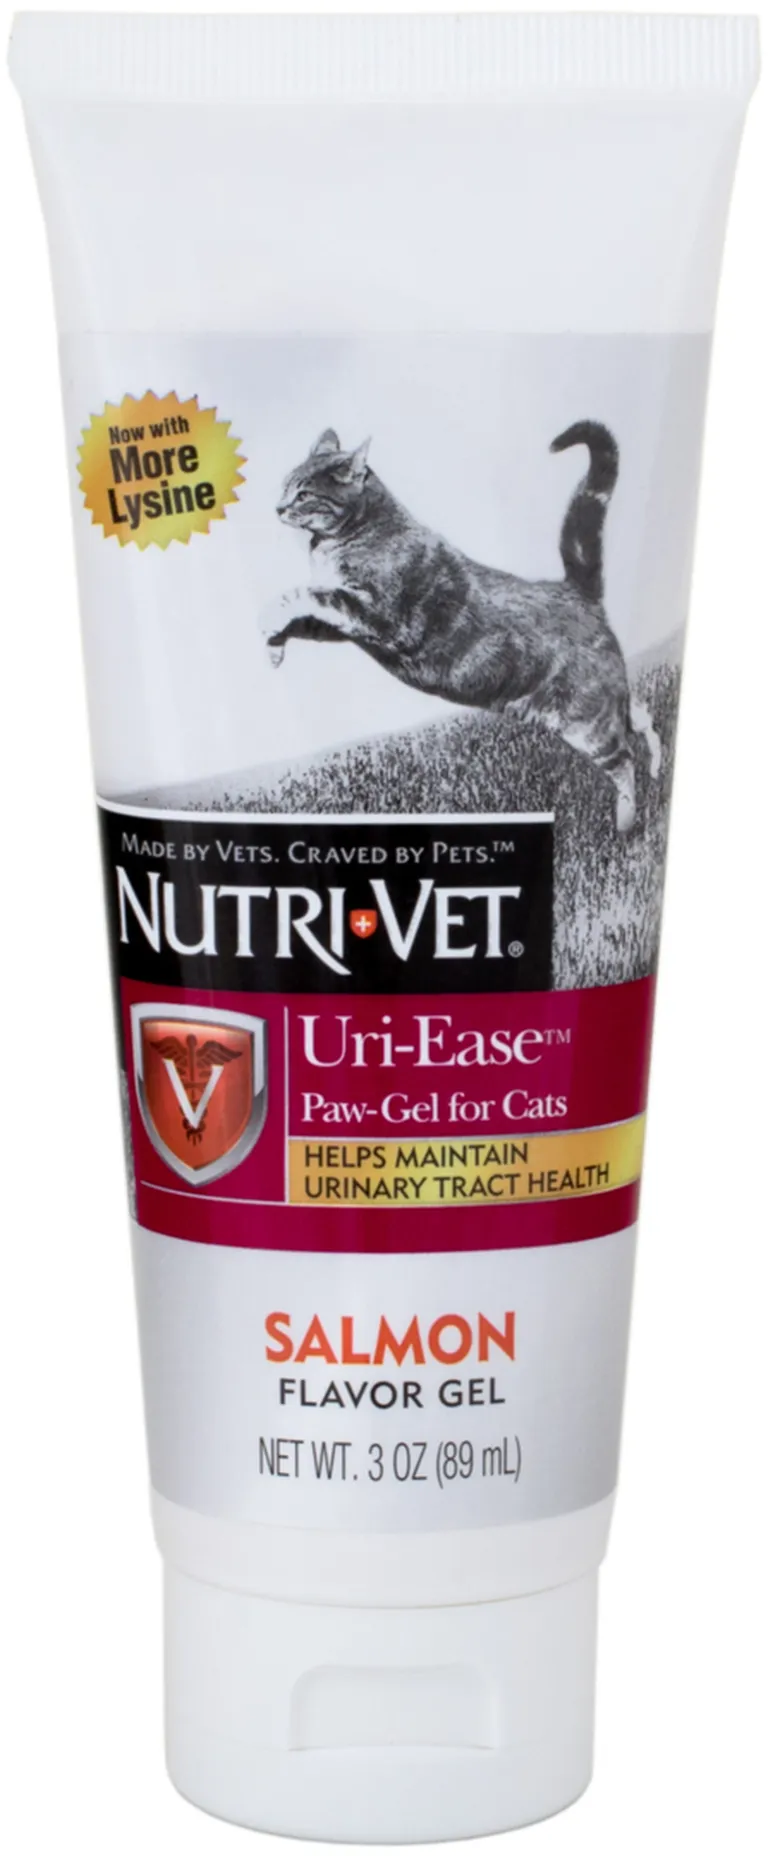 Nutri-Vet Uri-Ease Paw Gel for Cats Salmon Flavor Photo 1